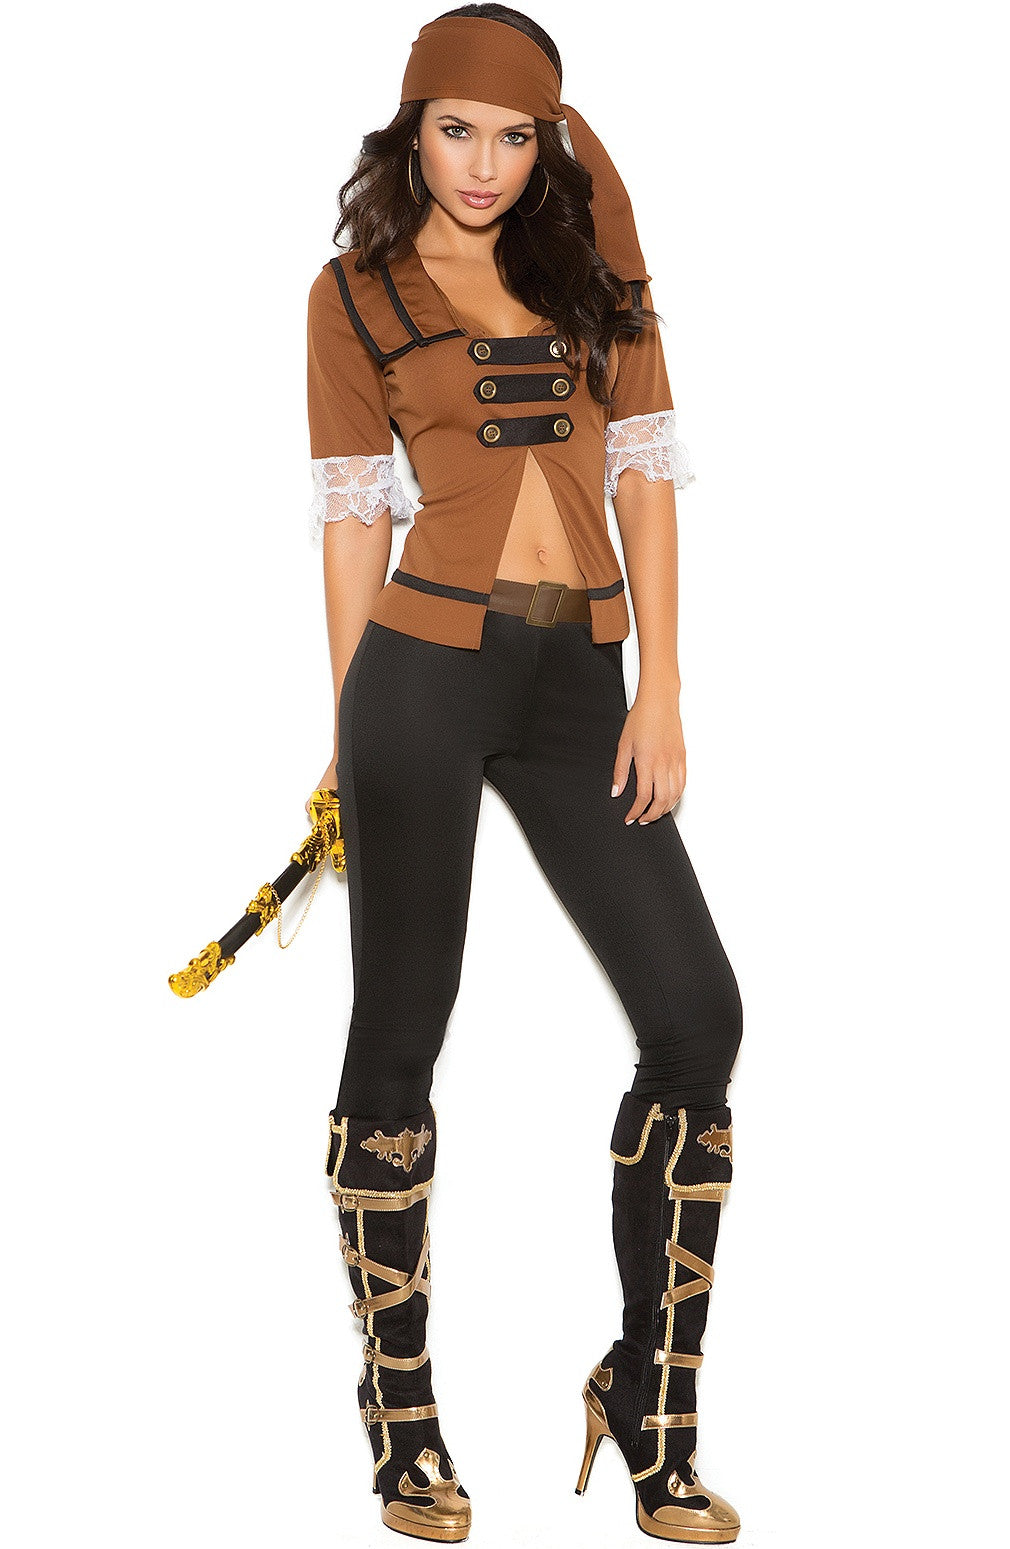 EM-9098 Treasure Pirate costume - Sexylingerieland